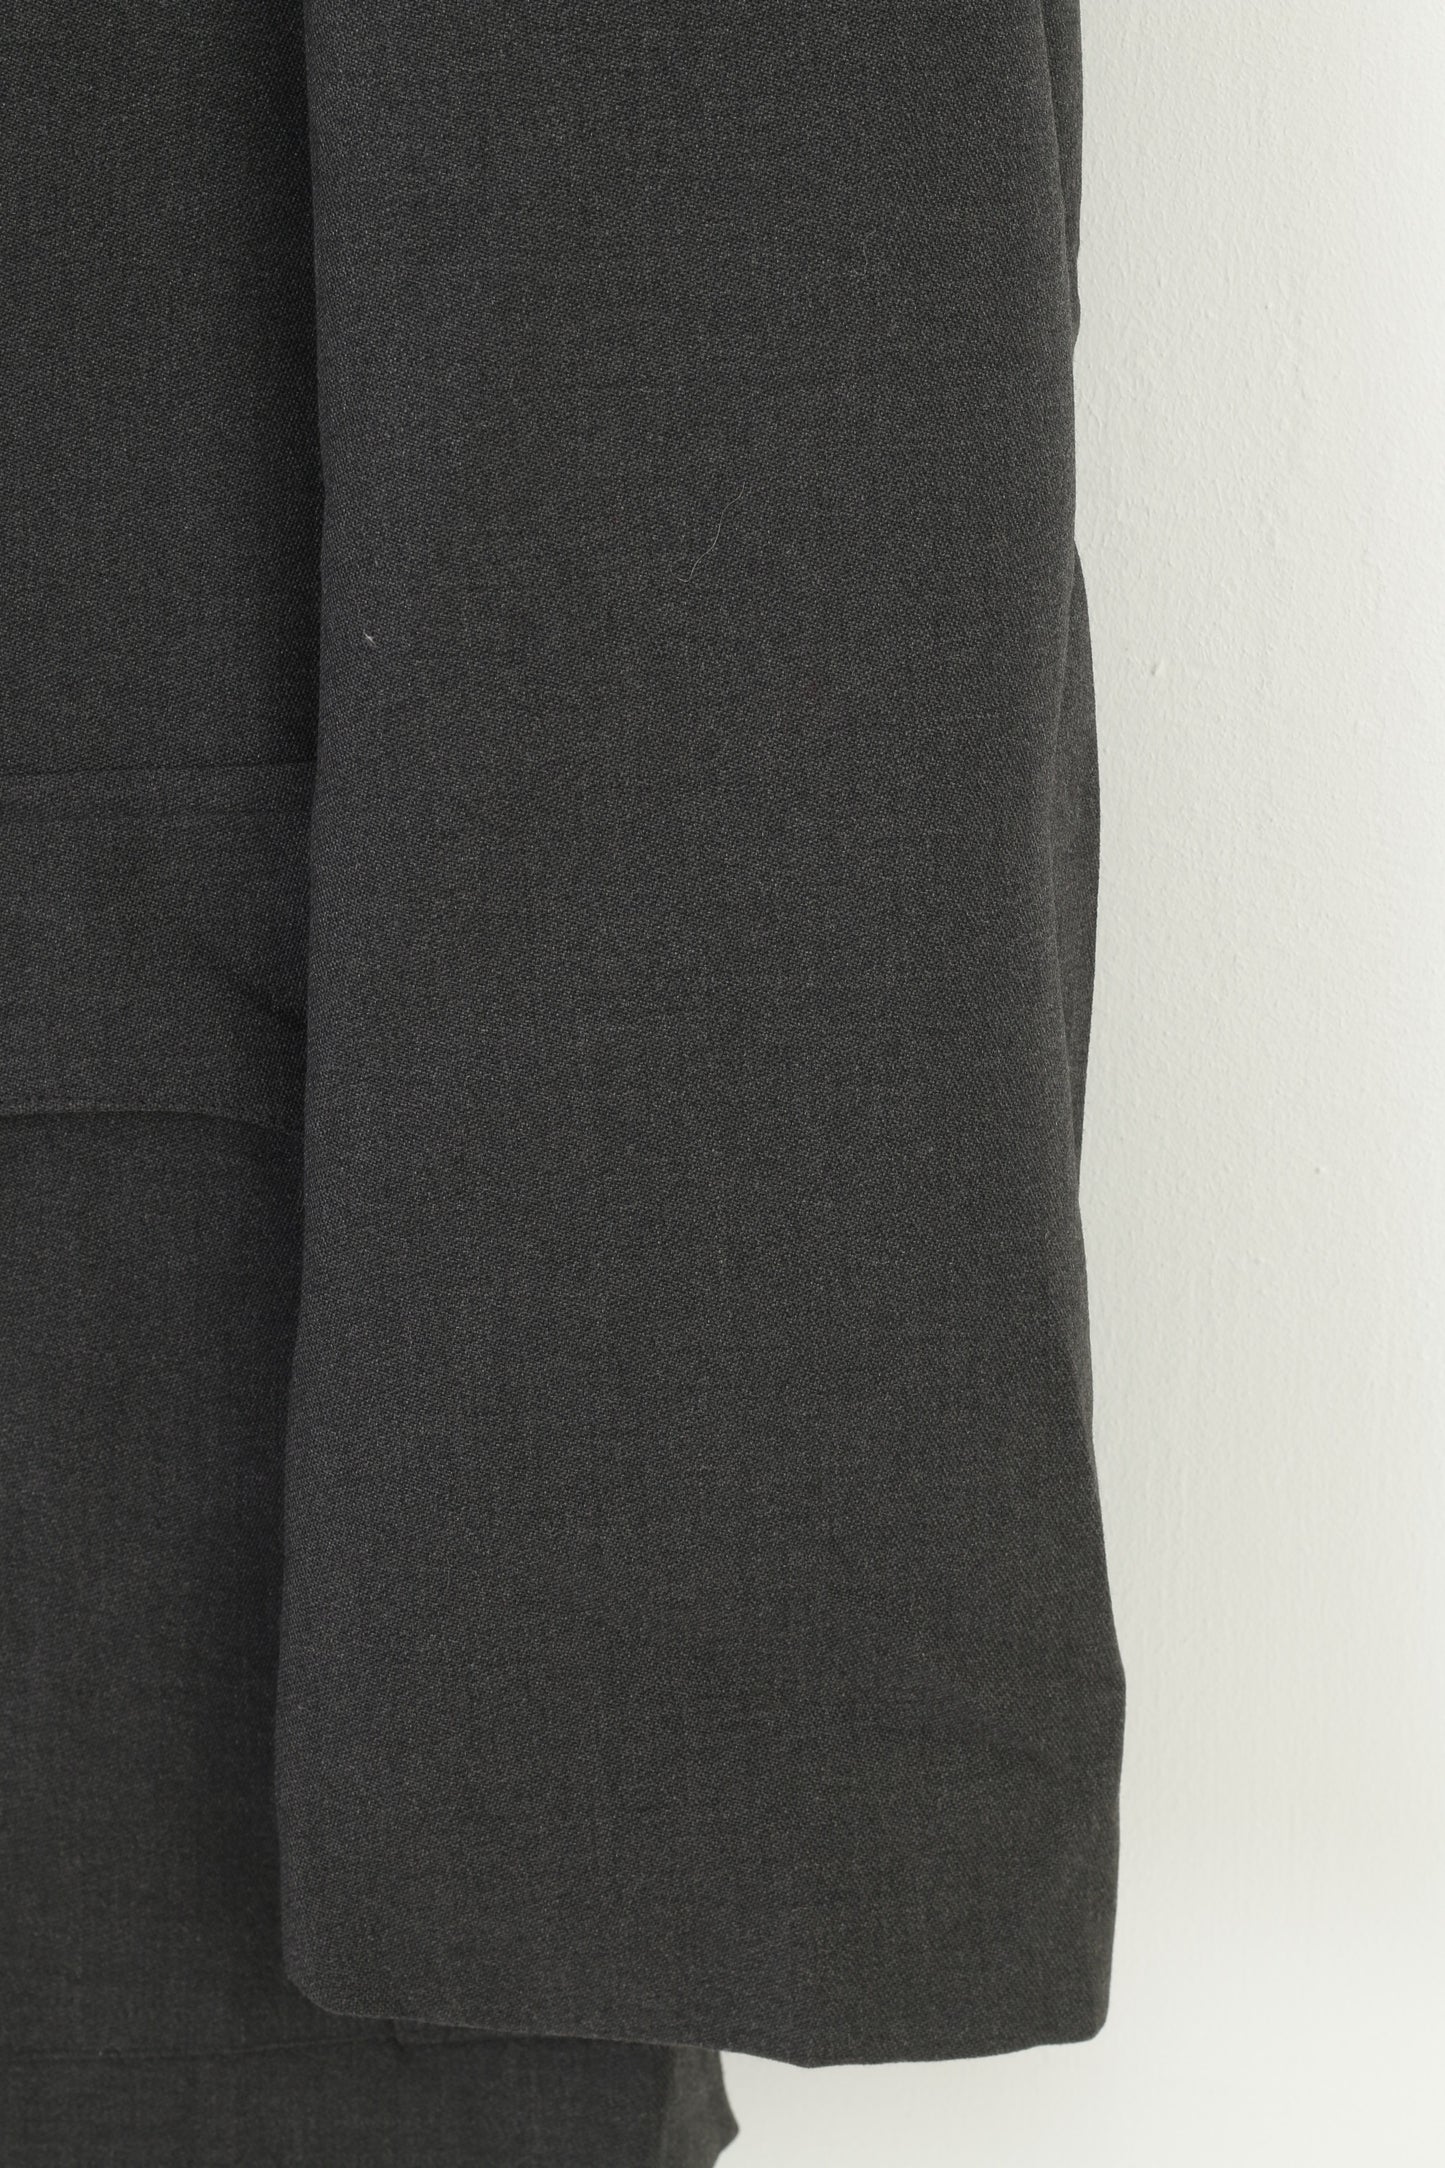 Harvik Hommes 42 Blazer Gris Or Boutons Multi Poches Simple Boutonnage Vintage Top Veste